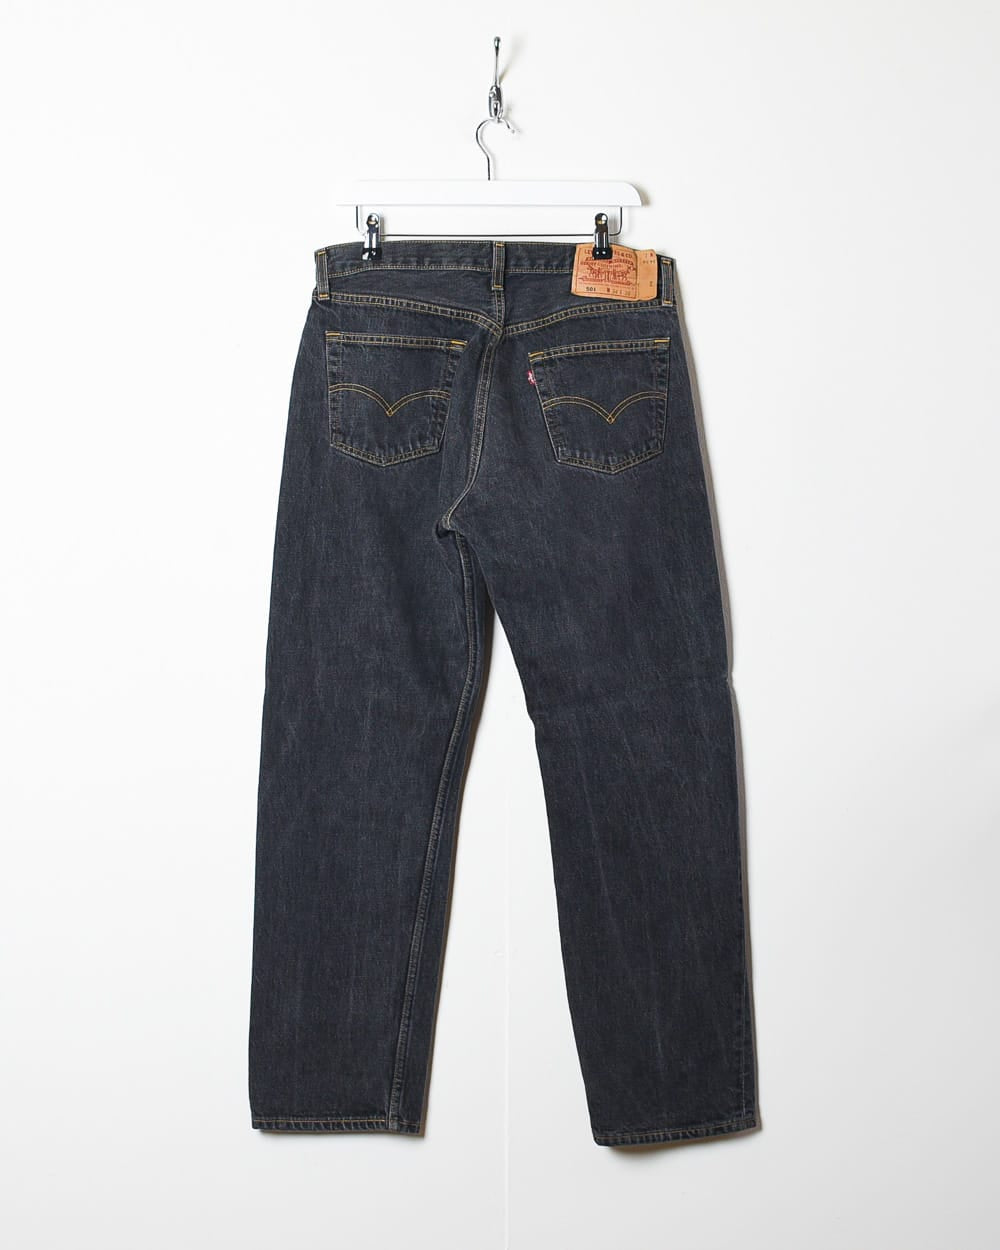 Black Levi's USA 501 Jeans  - W34 L30